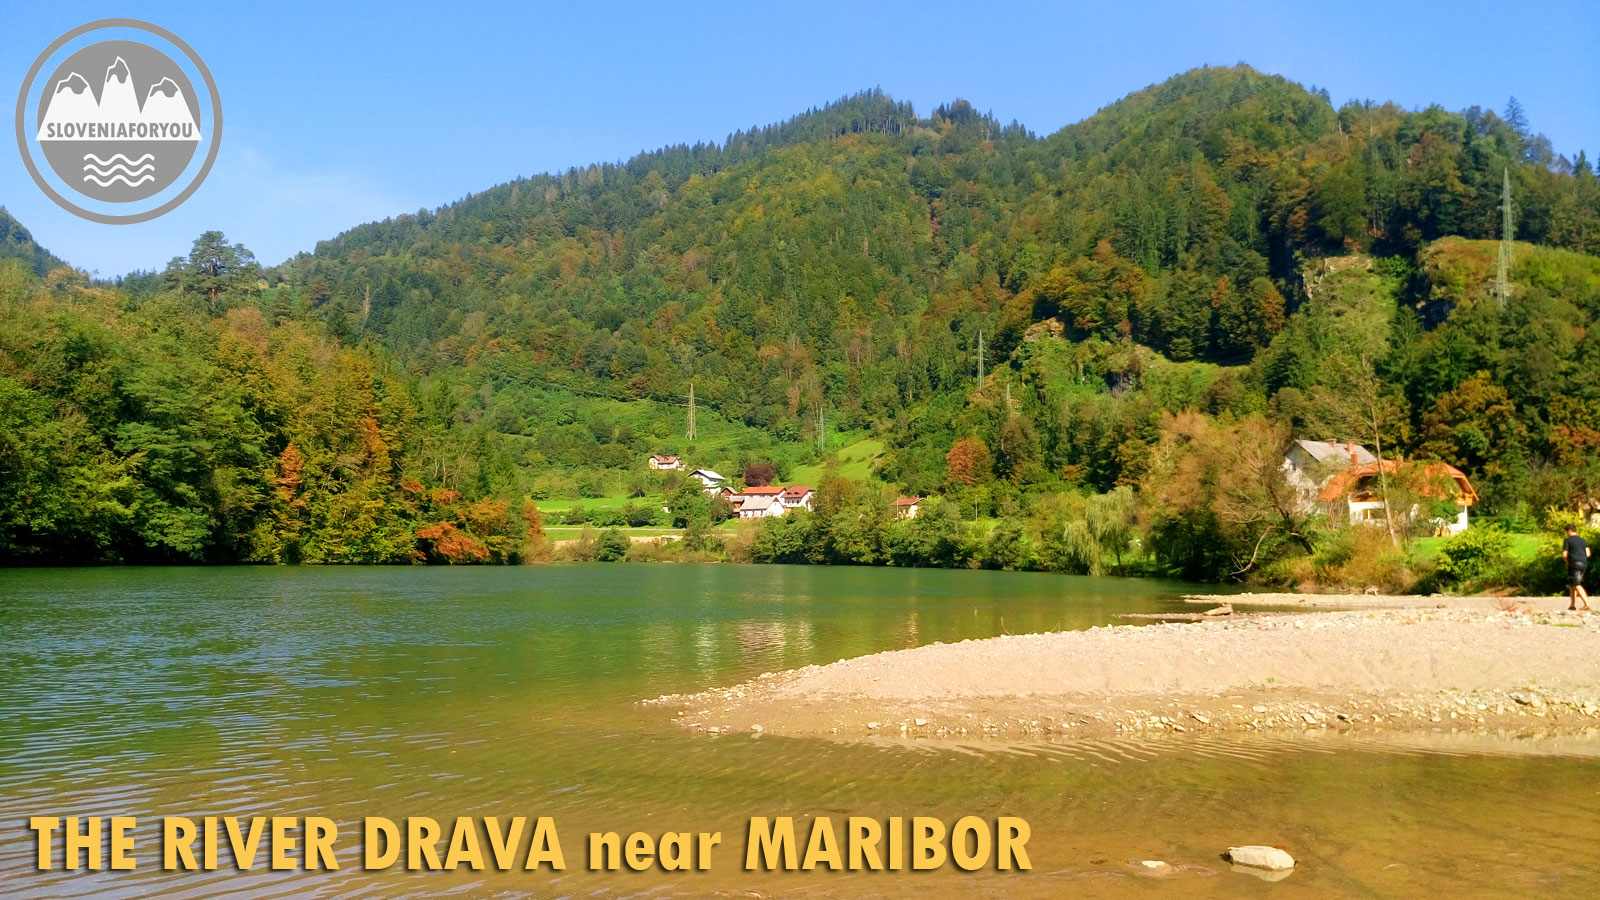 River Drava near Maribor, Sloveniaforyou